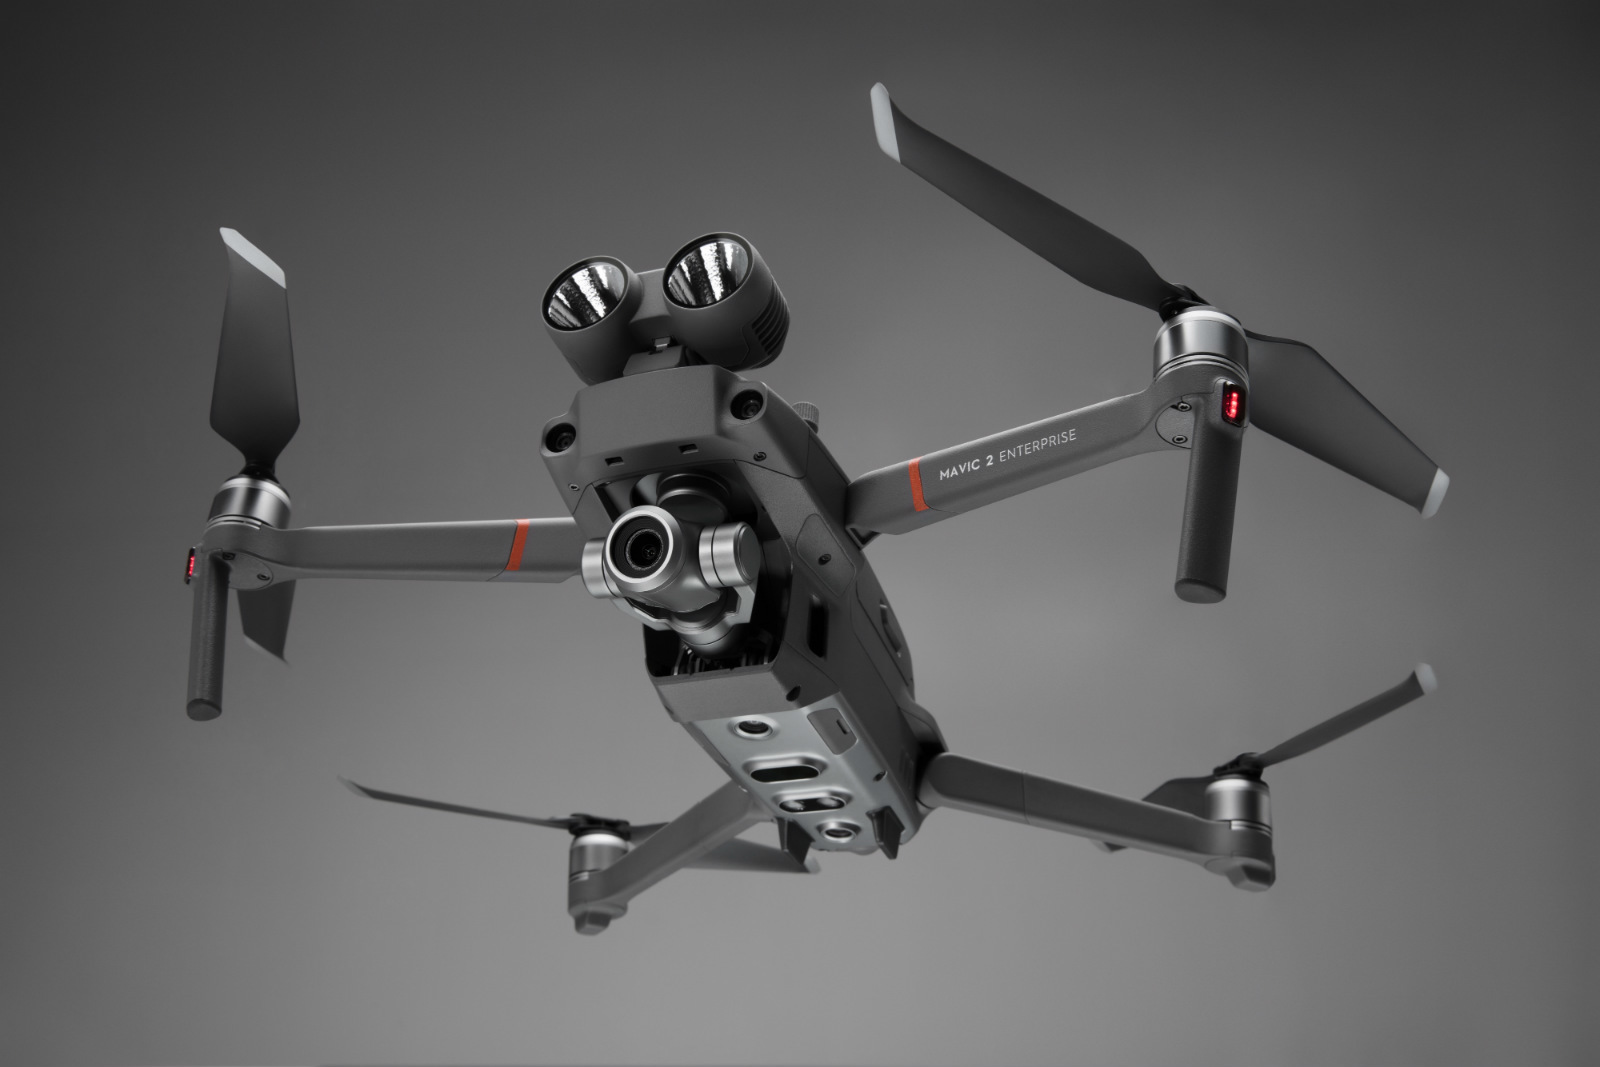 DJI launches Mavic 2 Enterprise drone with modular accessory mount